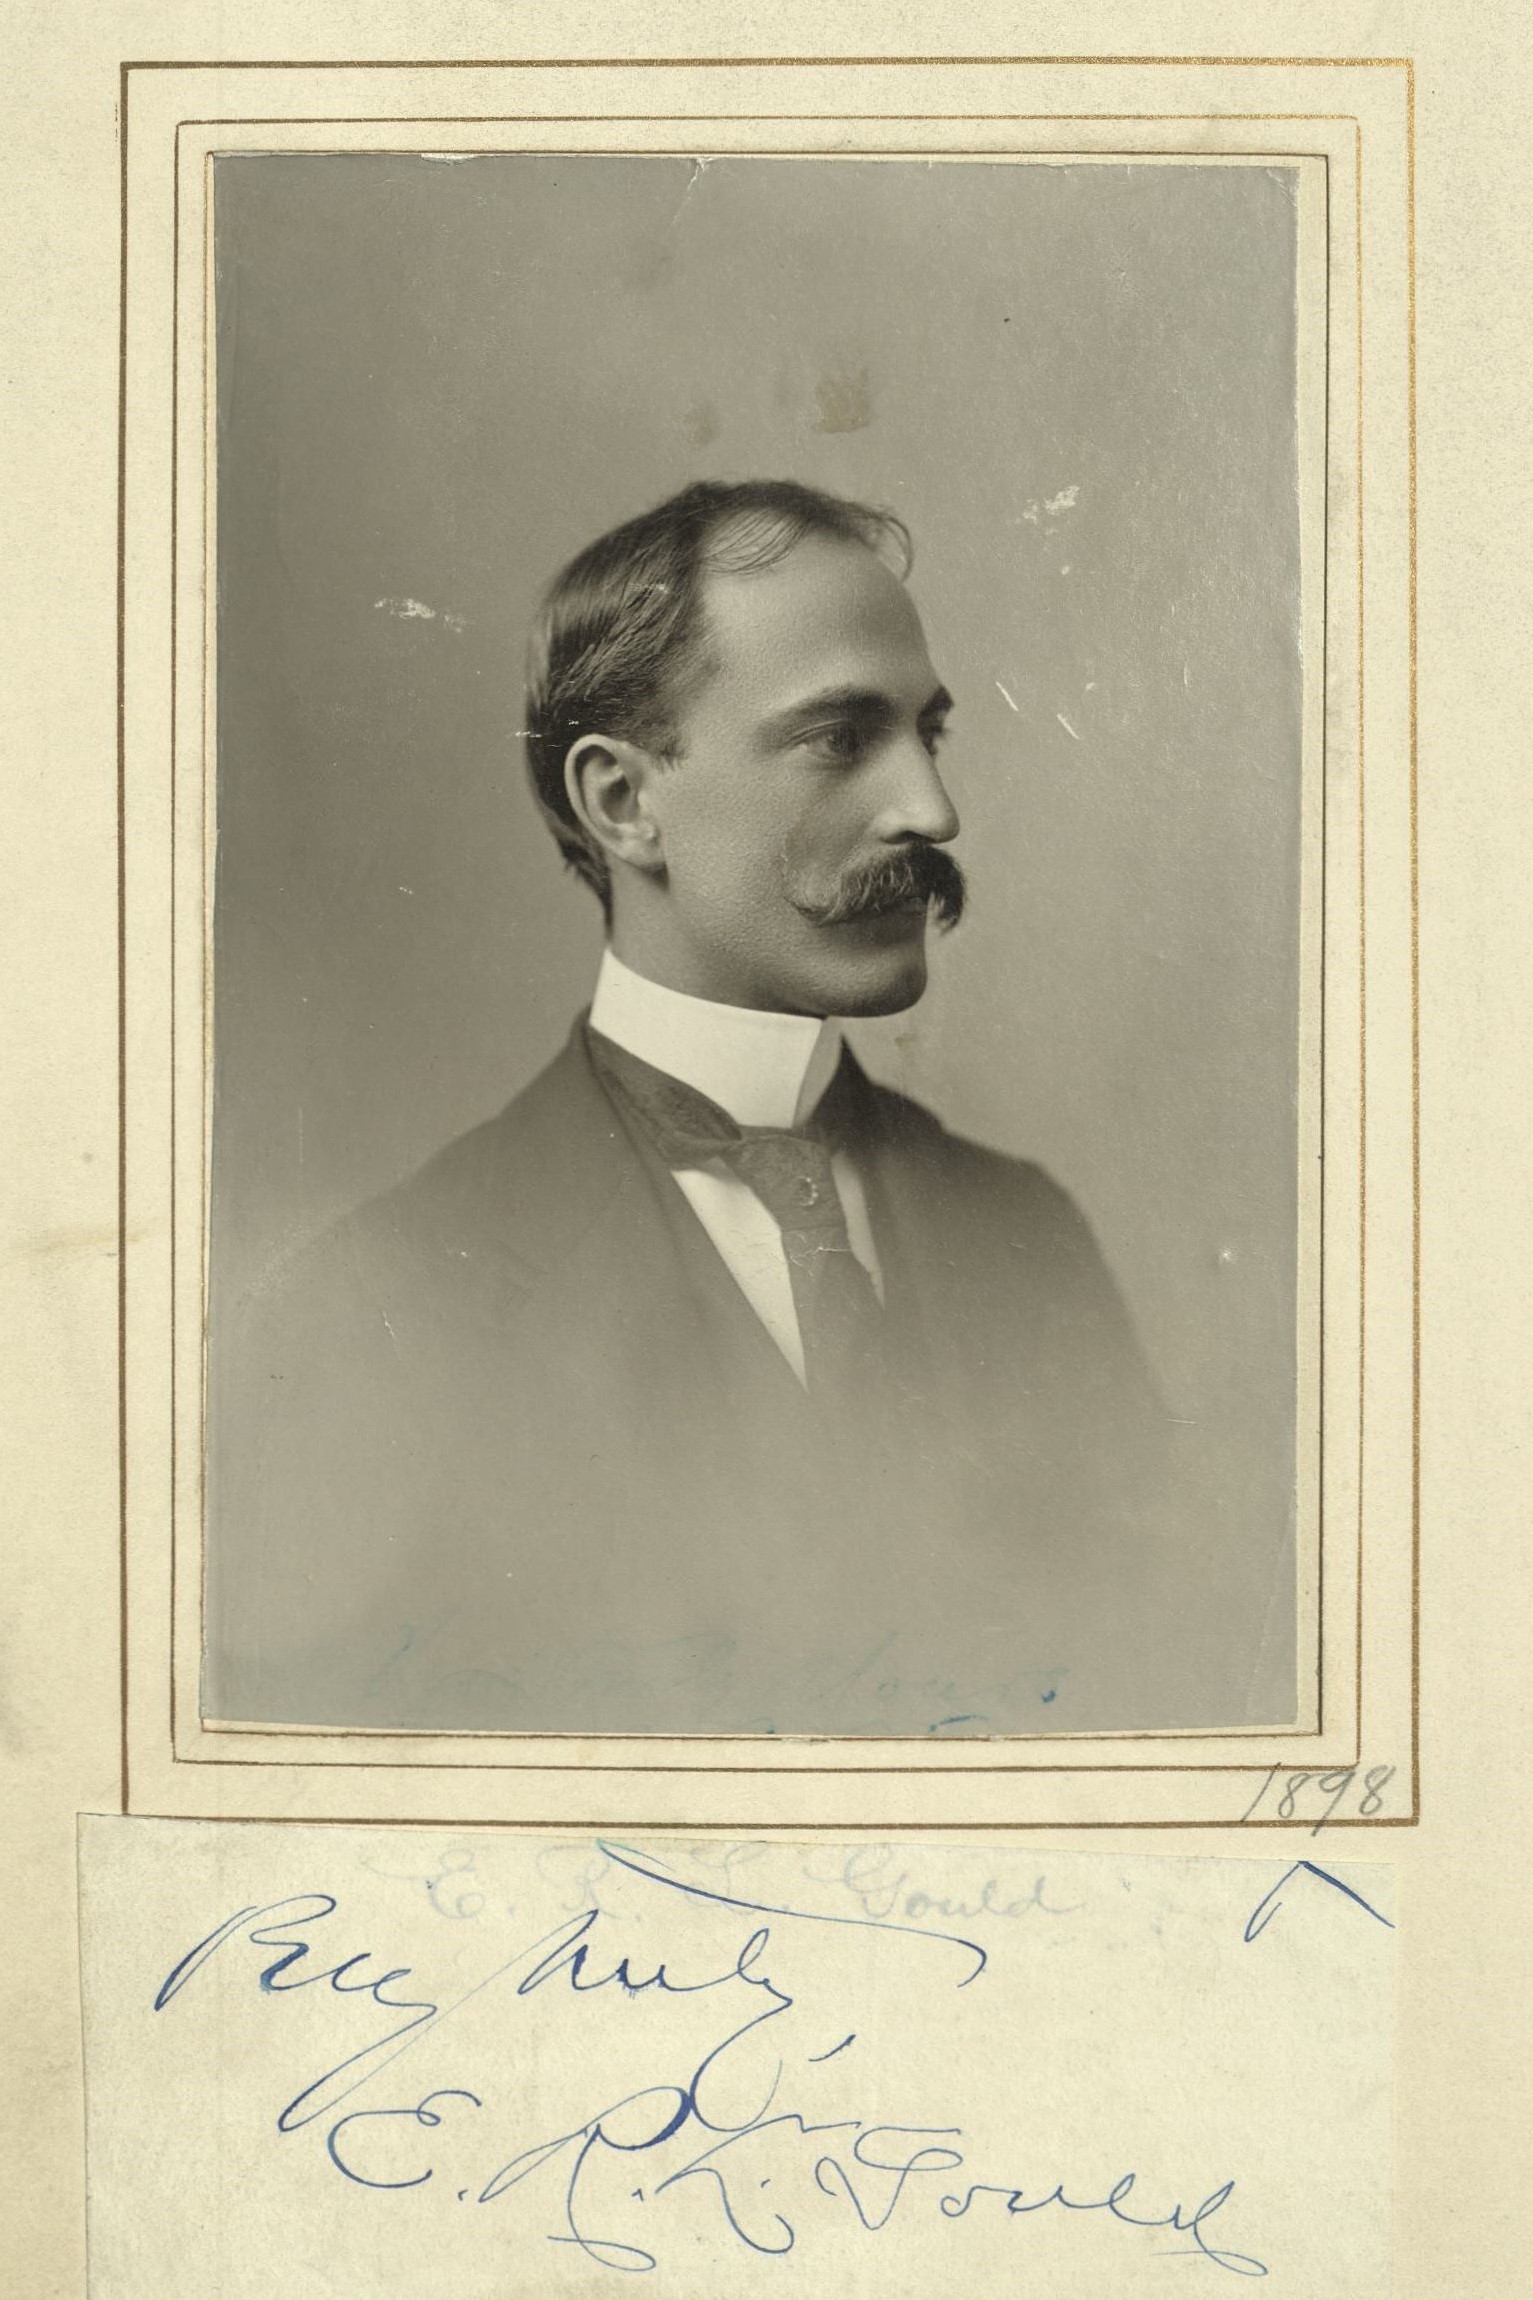 Member portrait of Elgin R. L. Gould